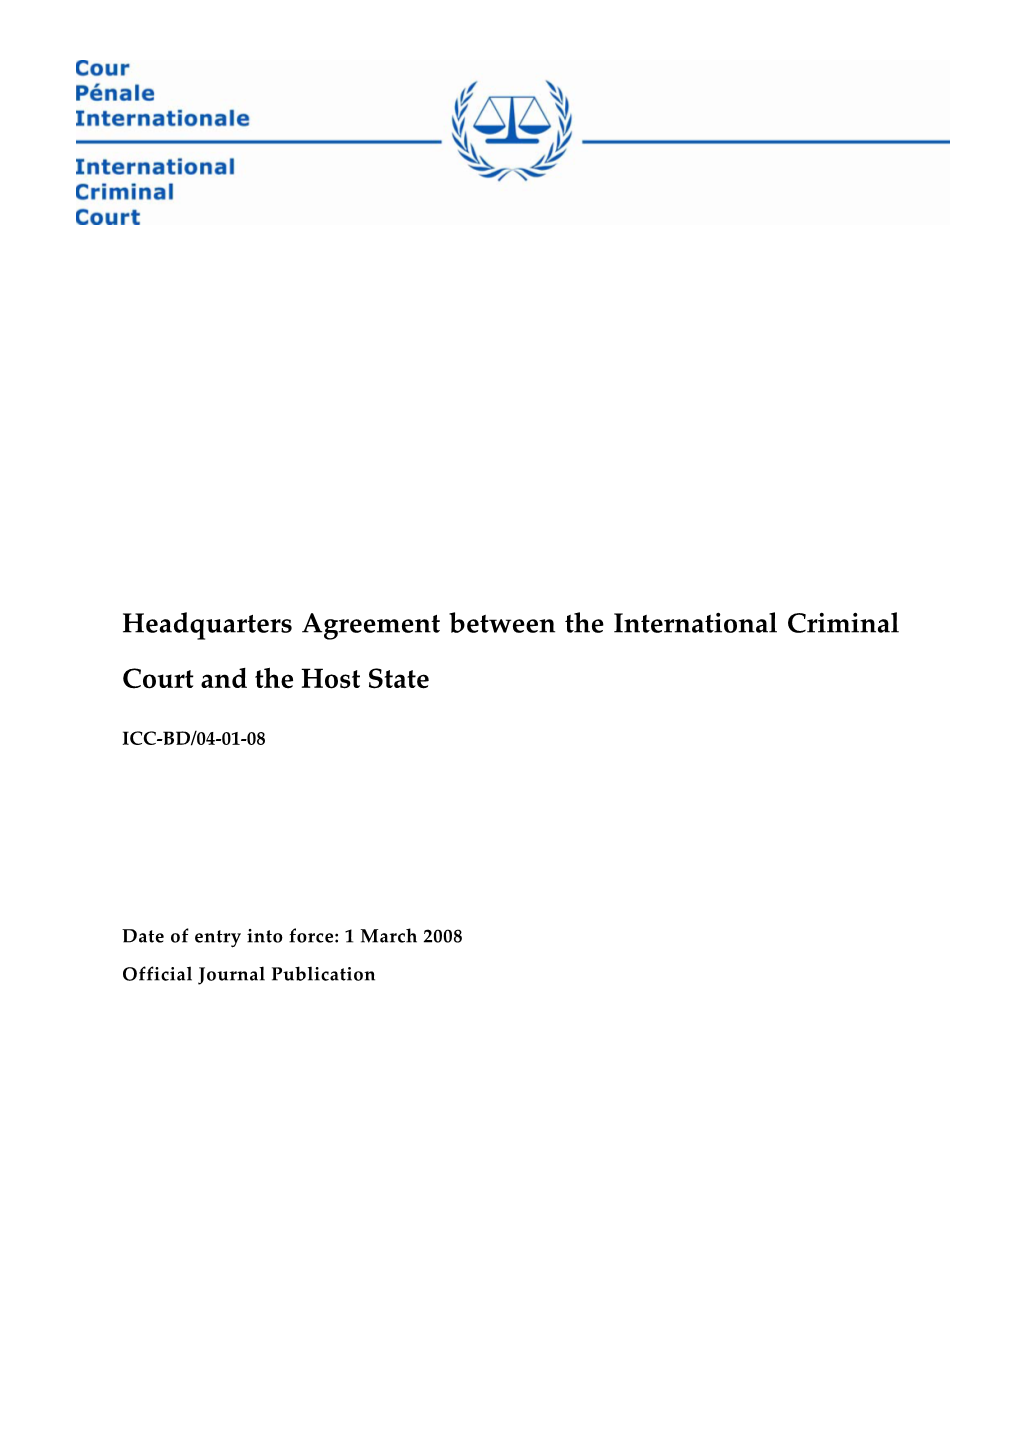 Headquarters Agreement Between the International Criminal